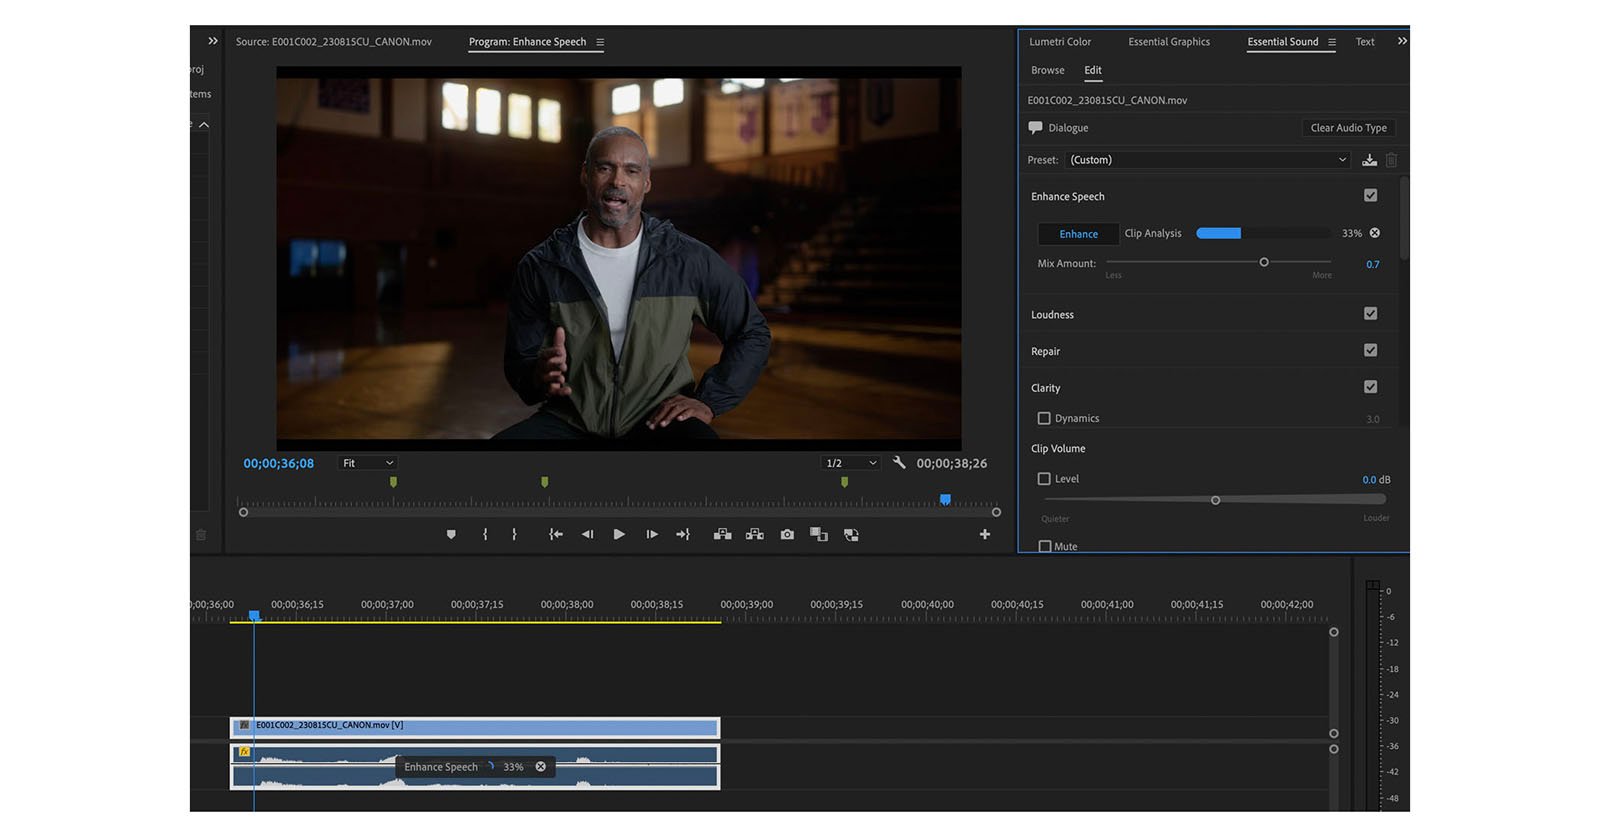 Adobe Premiere Pro Uses AI to Enhance Speech